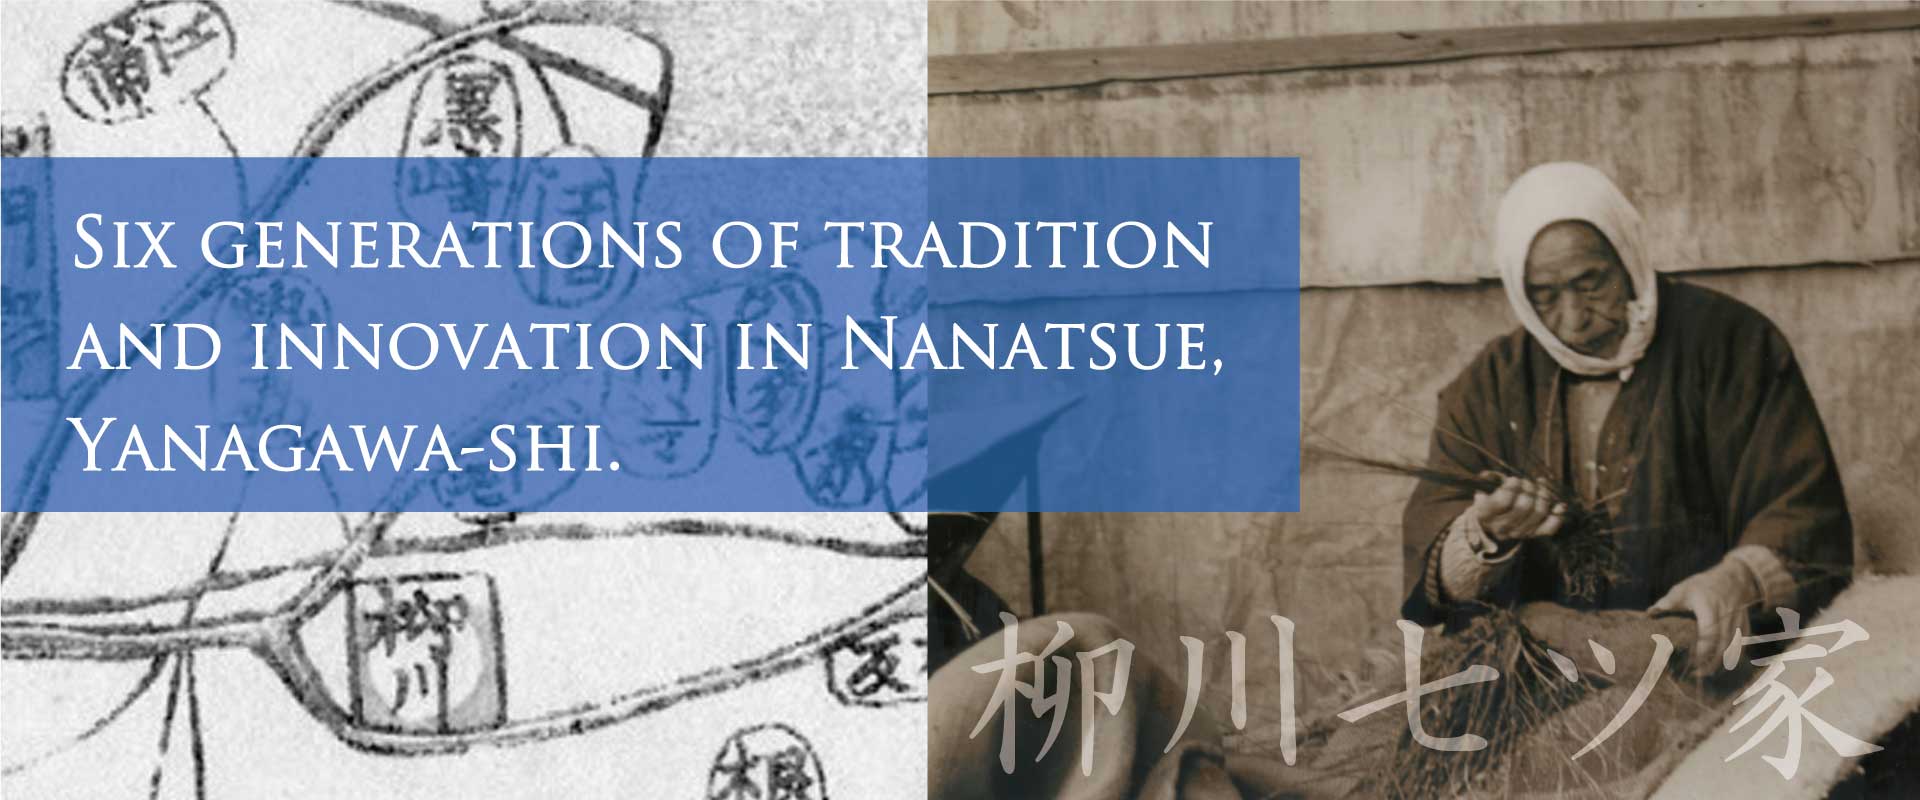 Six generations of tradition and innovation in Nanatsue, Yanagawa-shi.